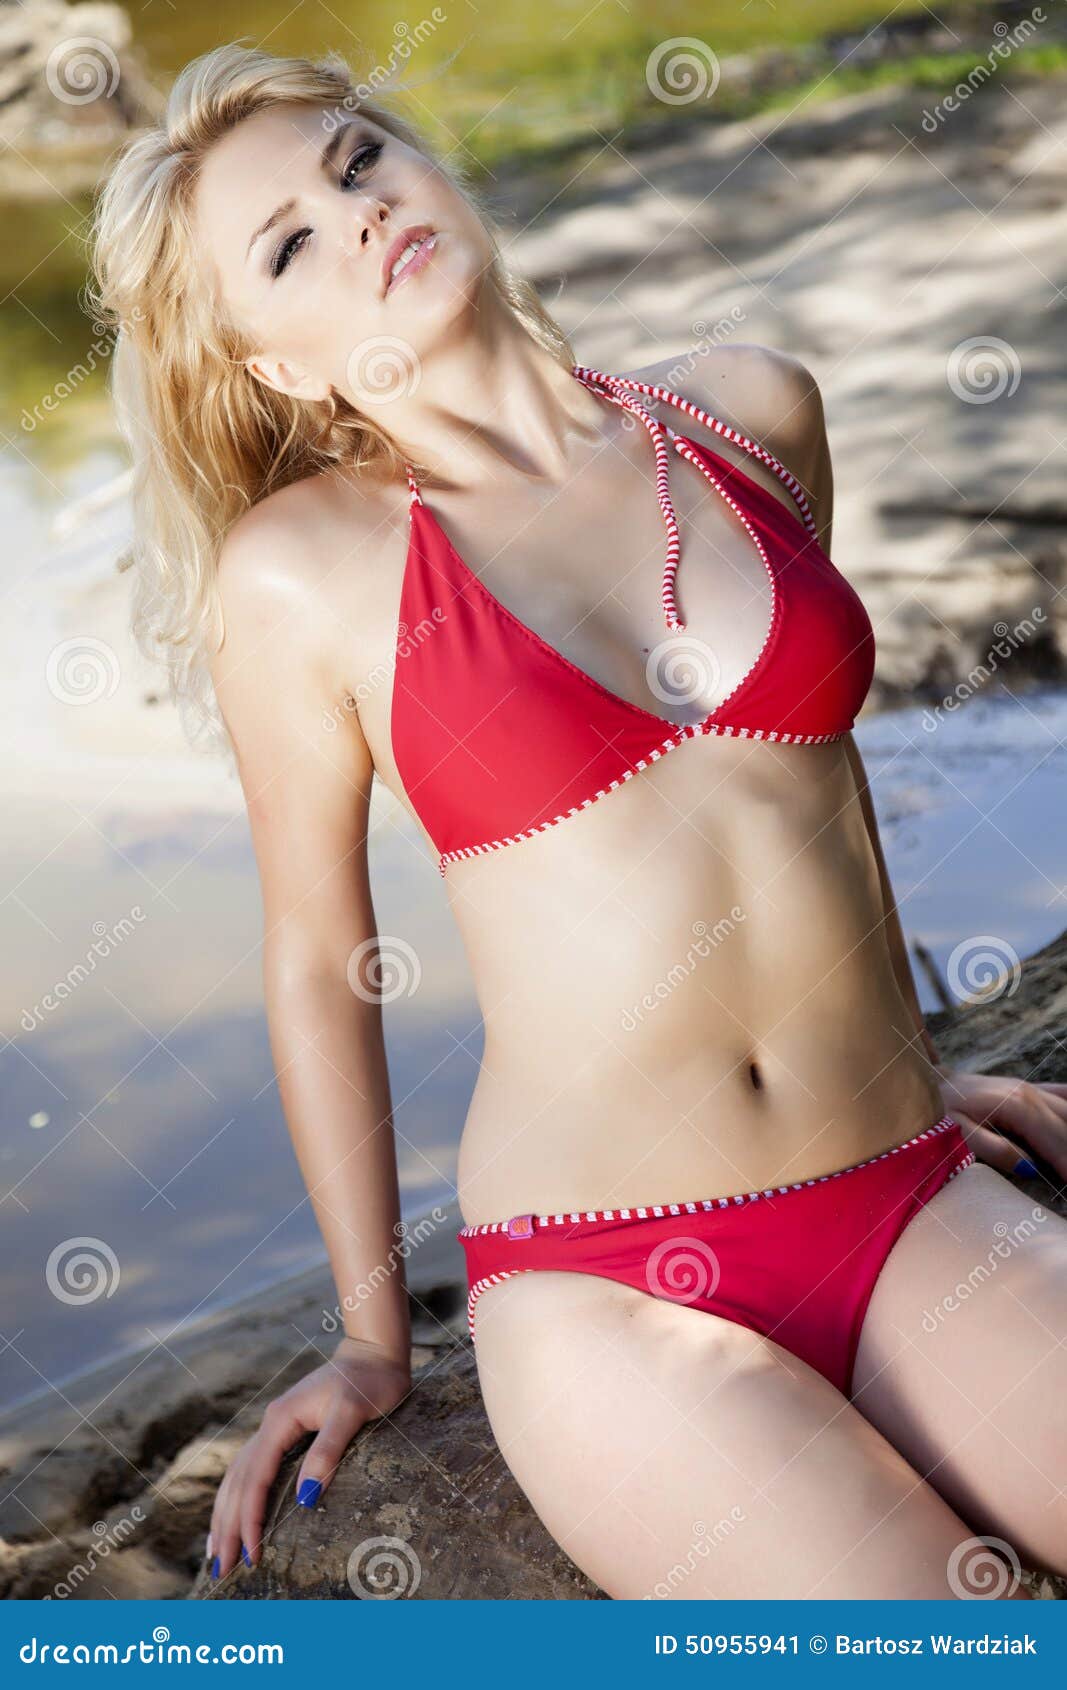 voyeur mature beach blond Sex Pics Hd